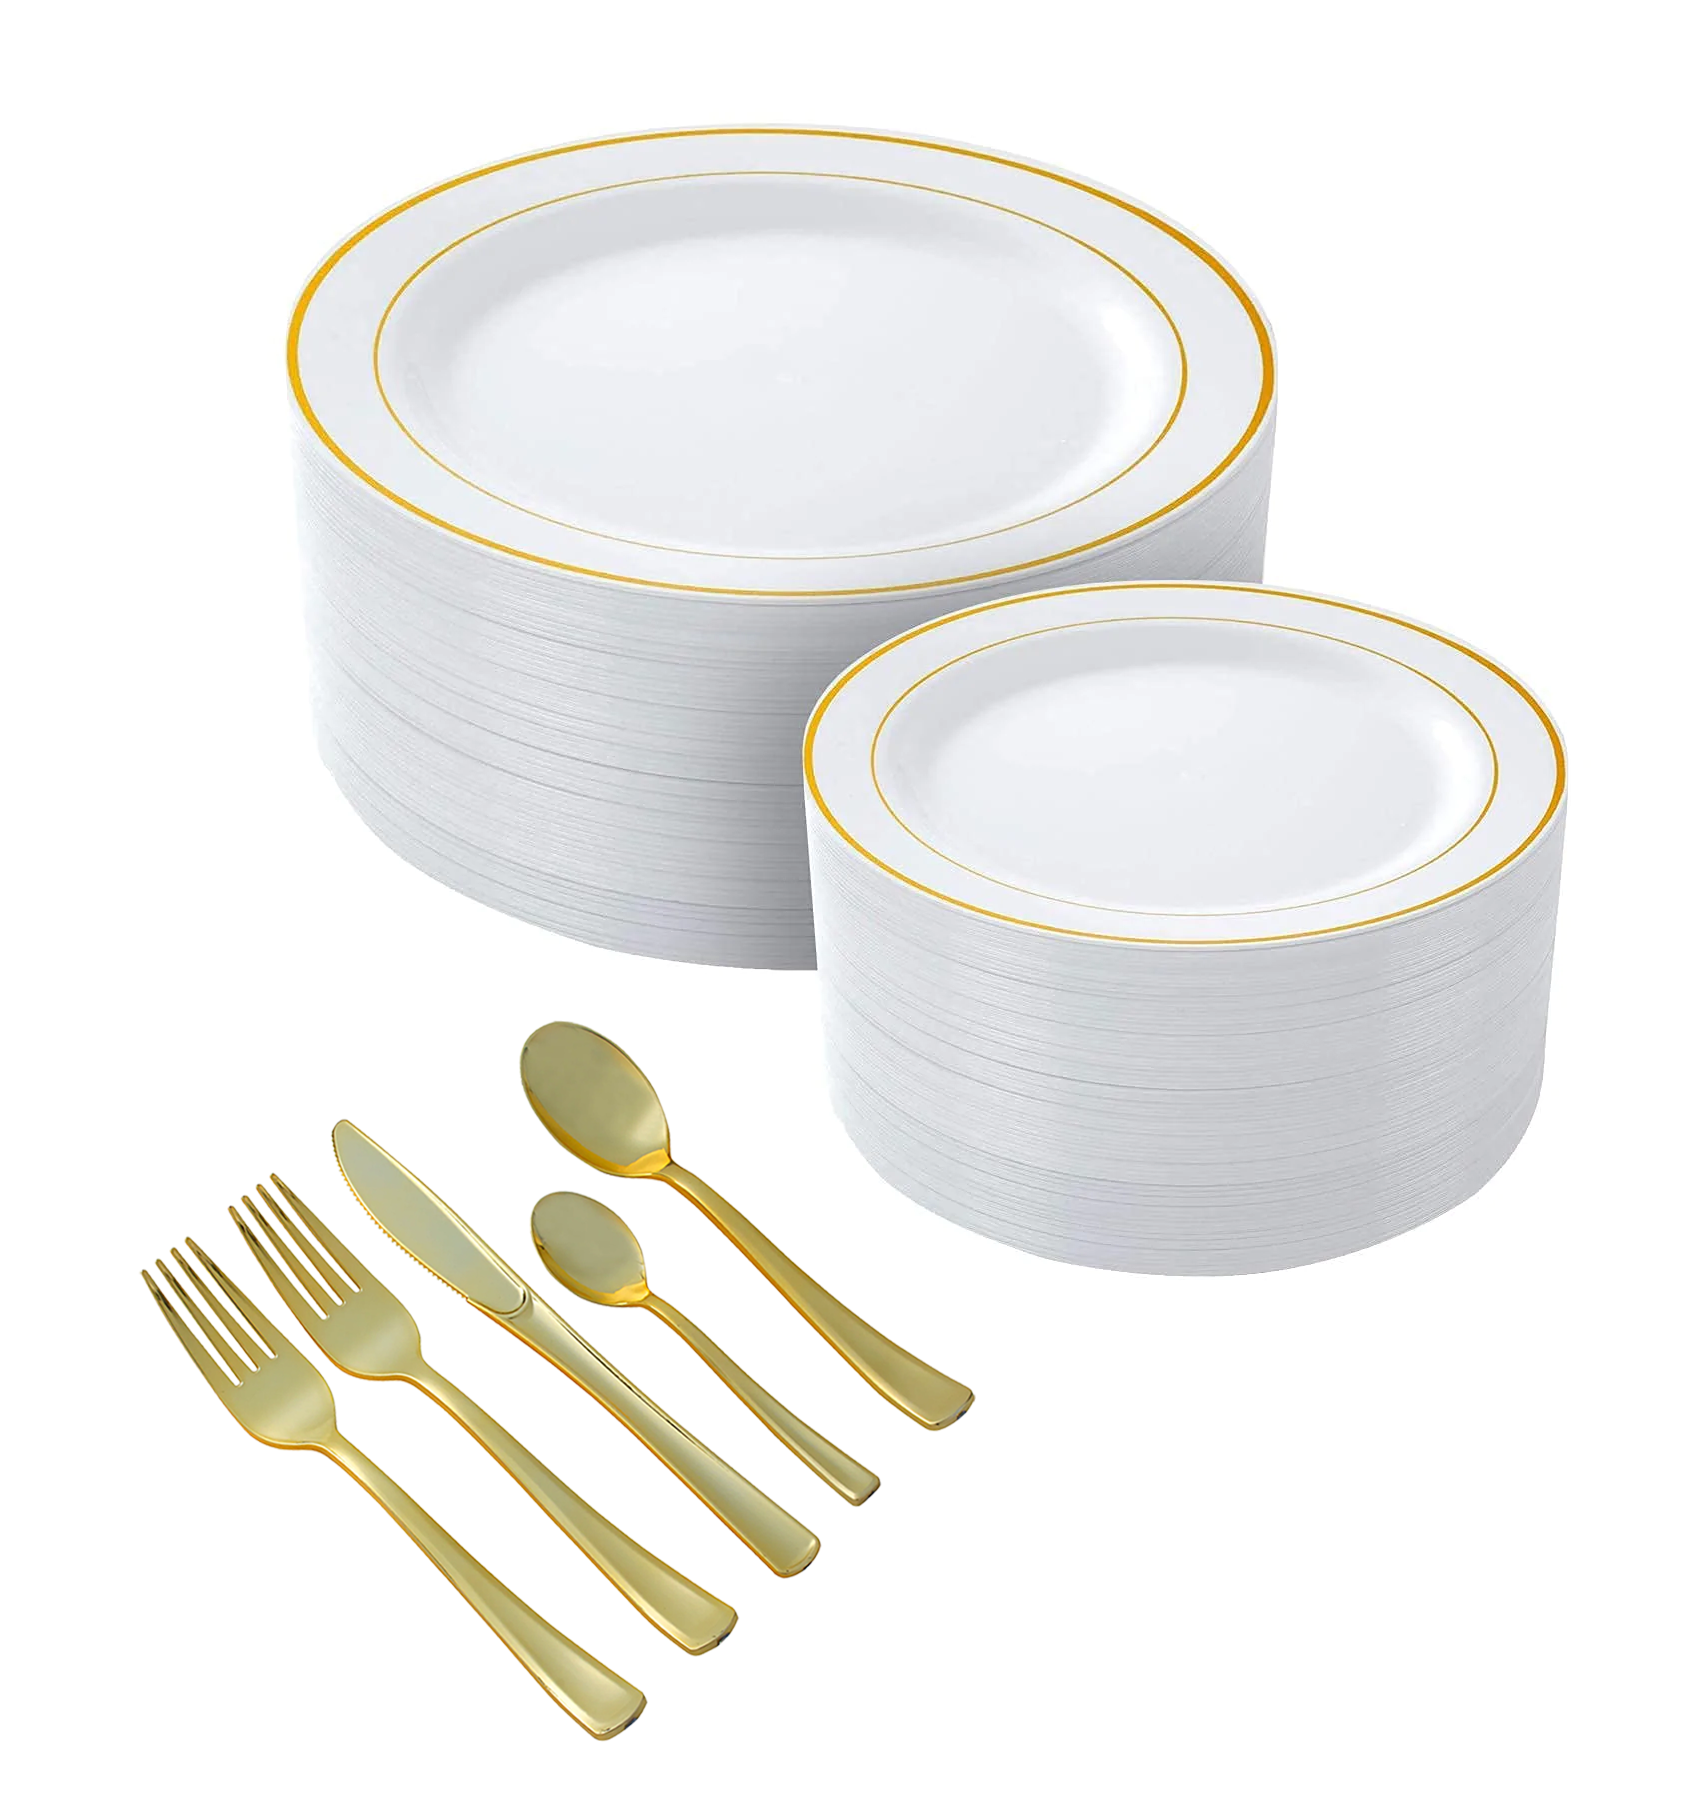 350-piece gold dinnerware set for 50 guests: 100 gold rim plastic plates, 250 gold plastic silverware utensils.